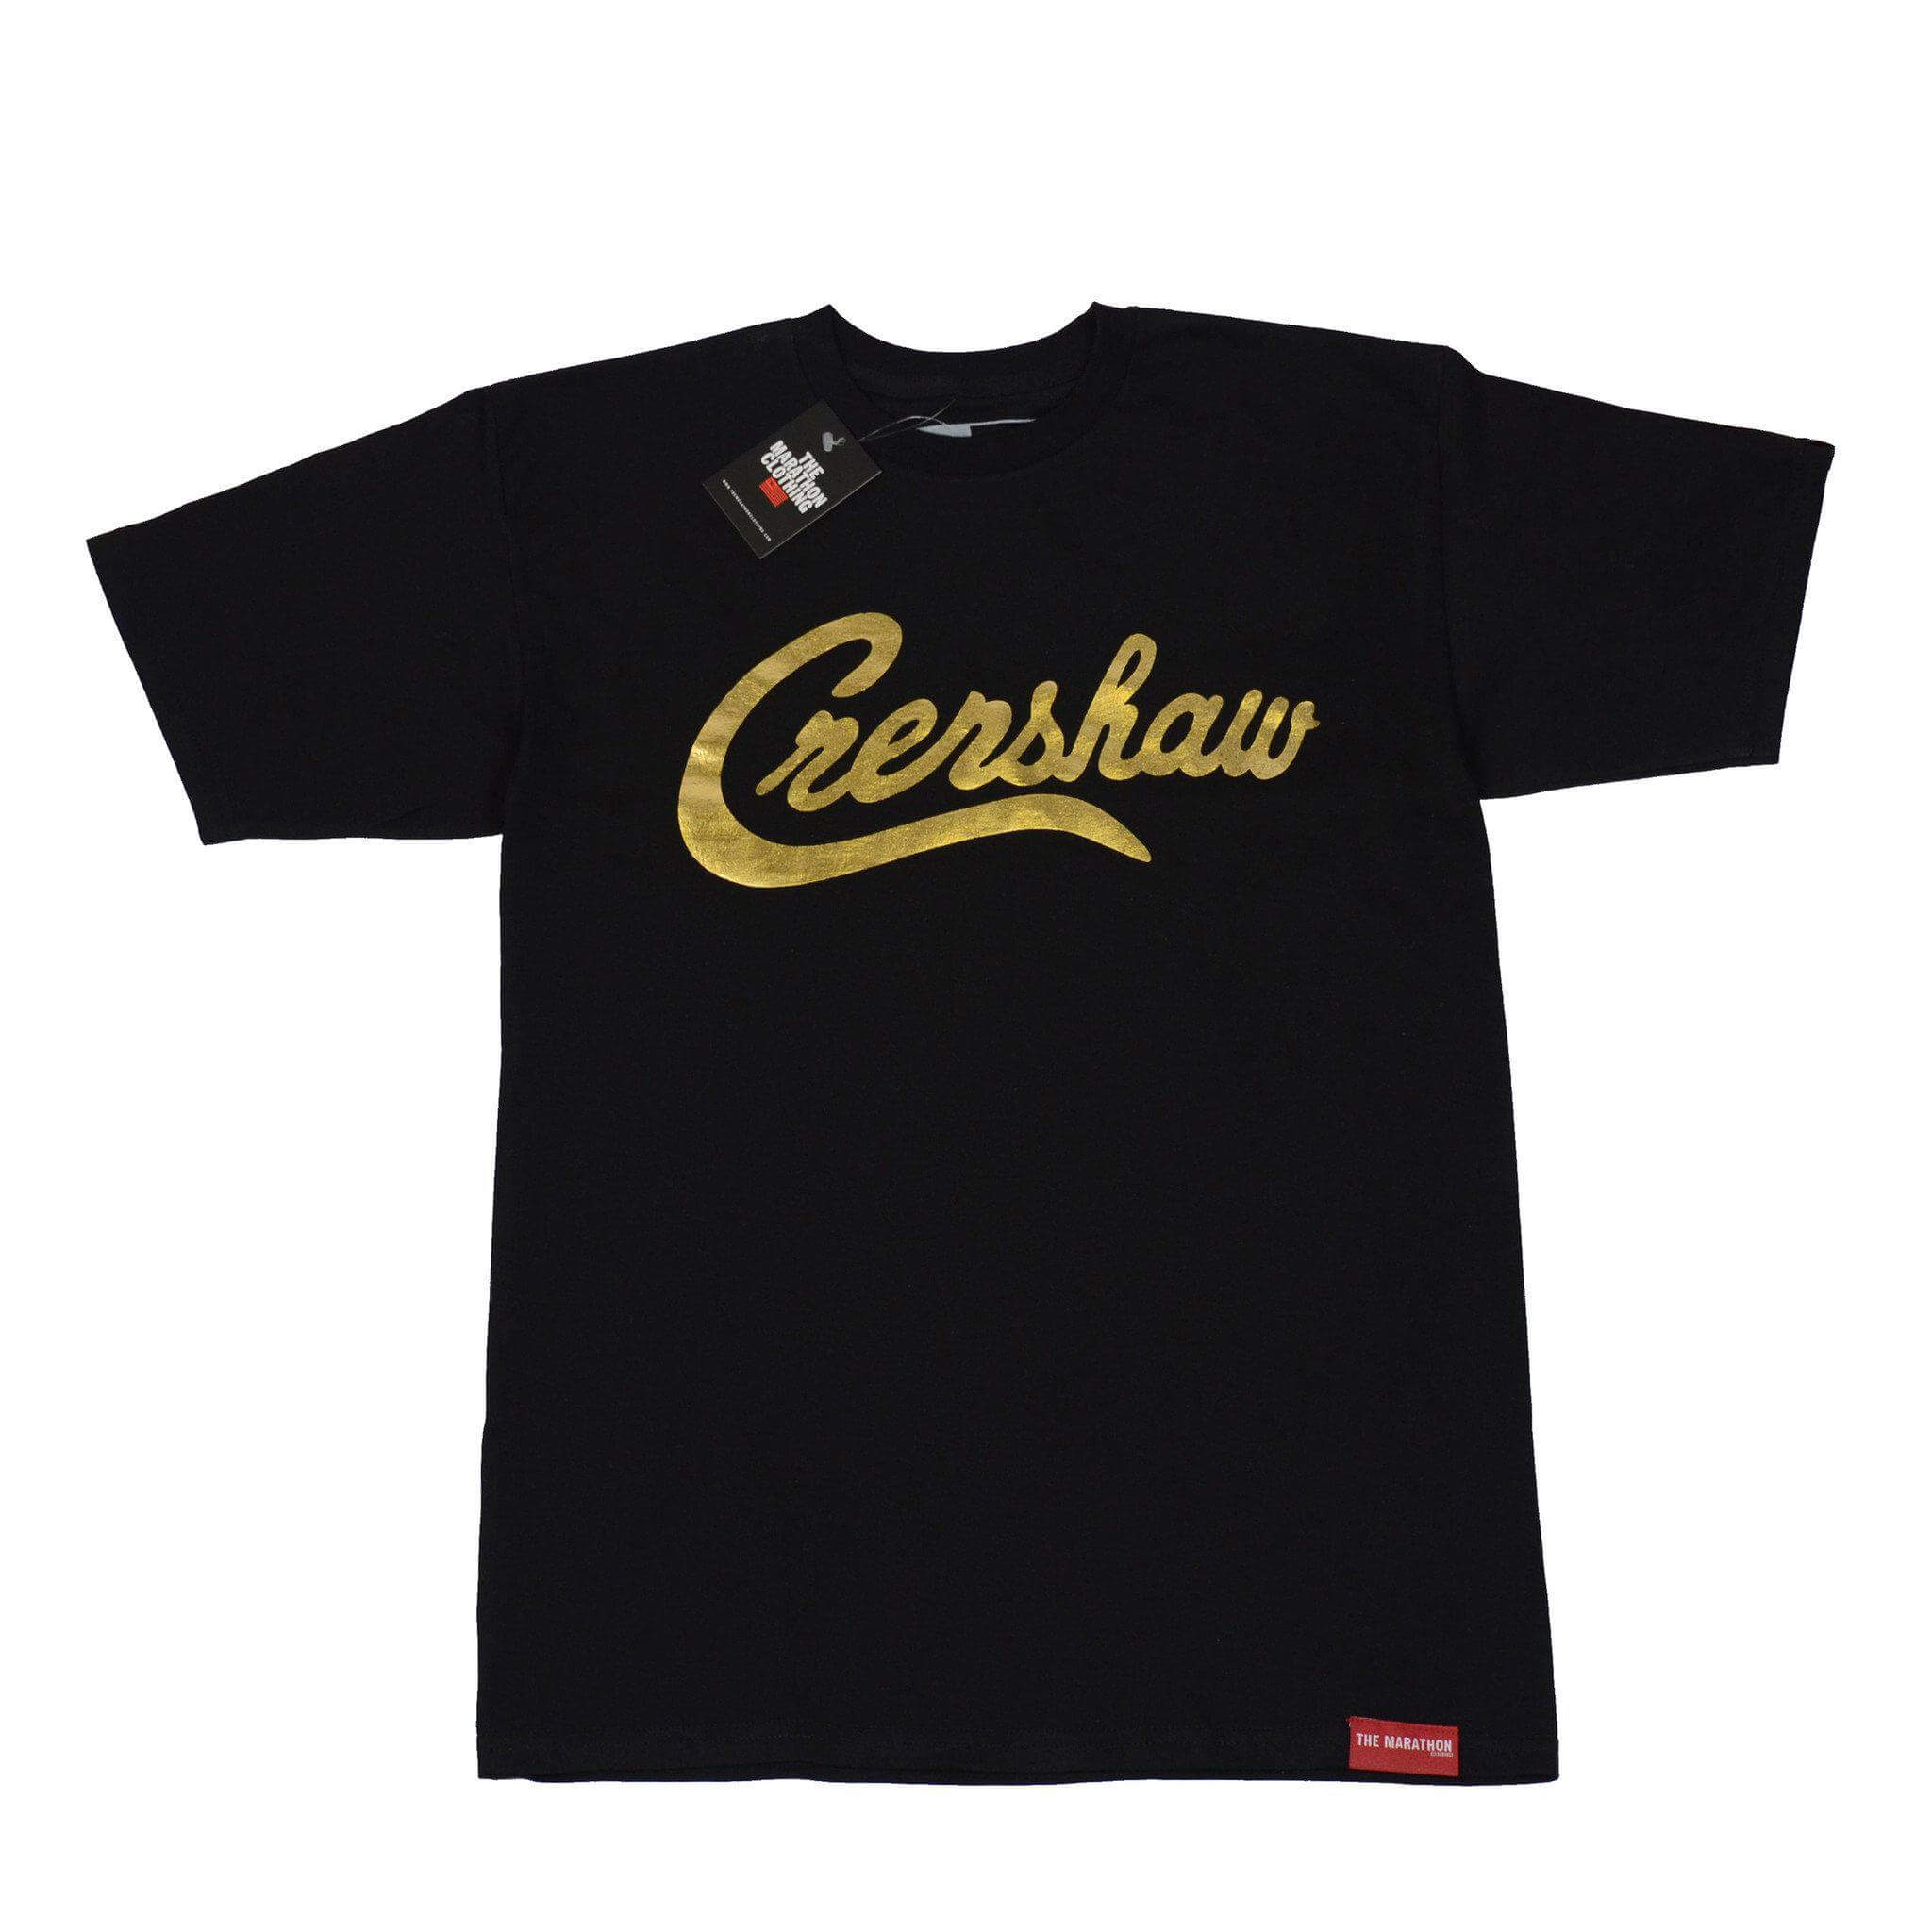 Crenshaw T-Shirt - Black/Gold Foil ...